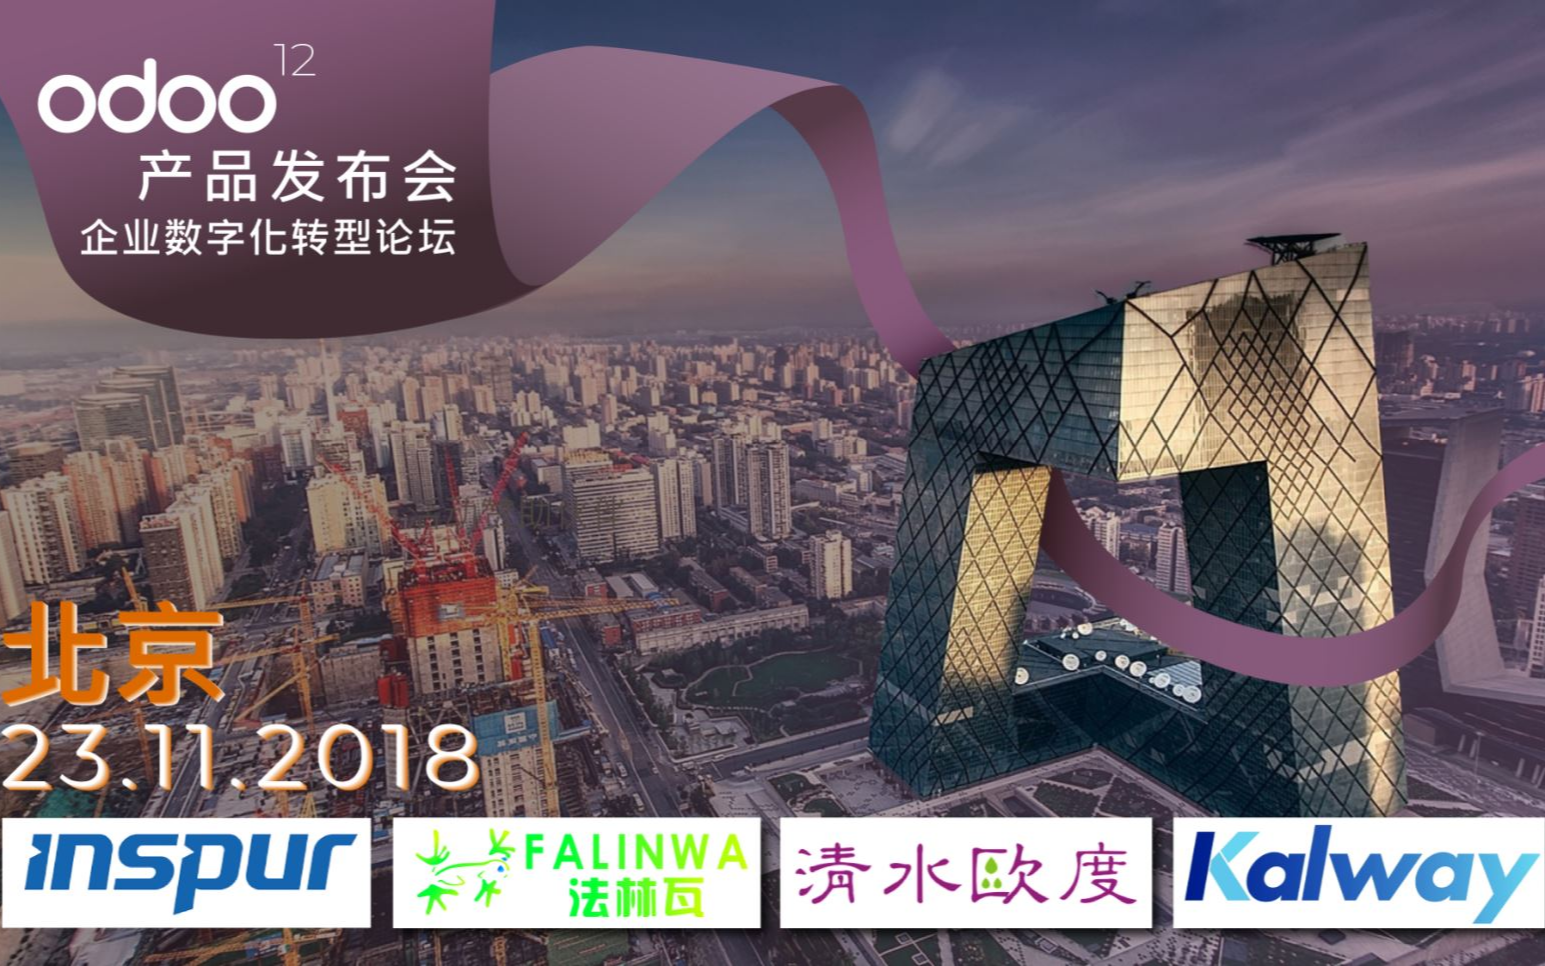 Odoo 12 北京产品发布会暨企业数字化转型论坛2018（北京）